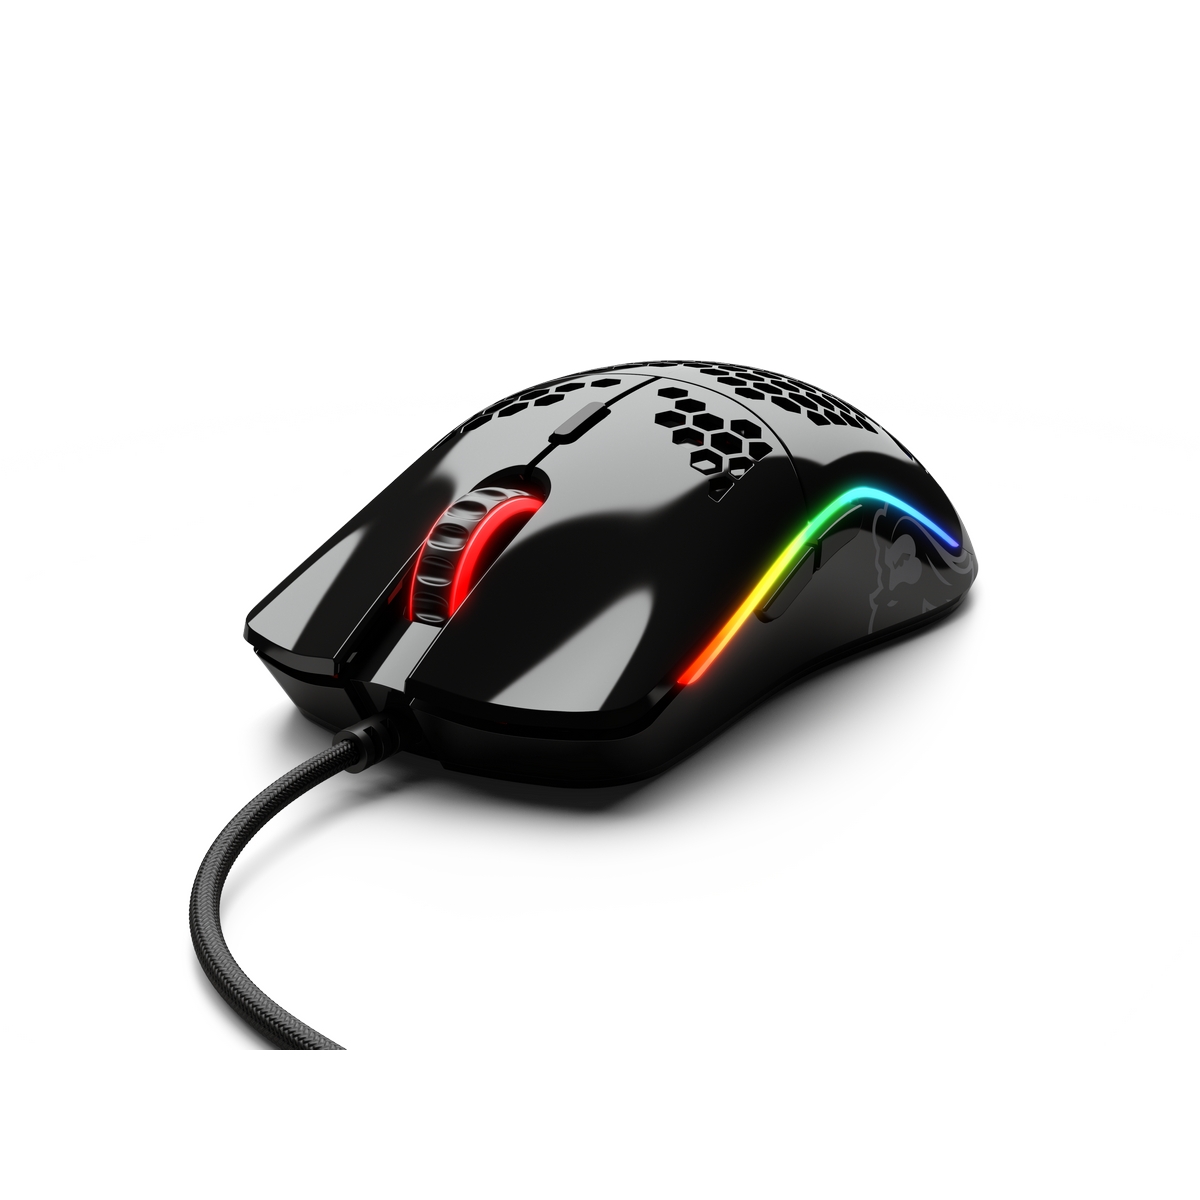 B Grade Glorious Model O USB RGB Odin Gaming Mouse - Glossy Black (GO-GBLACK)